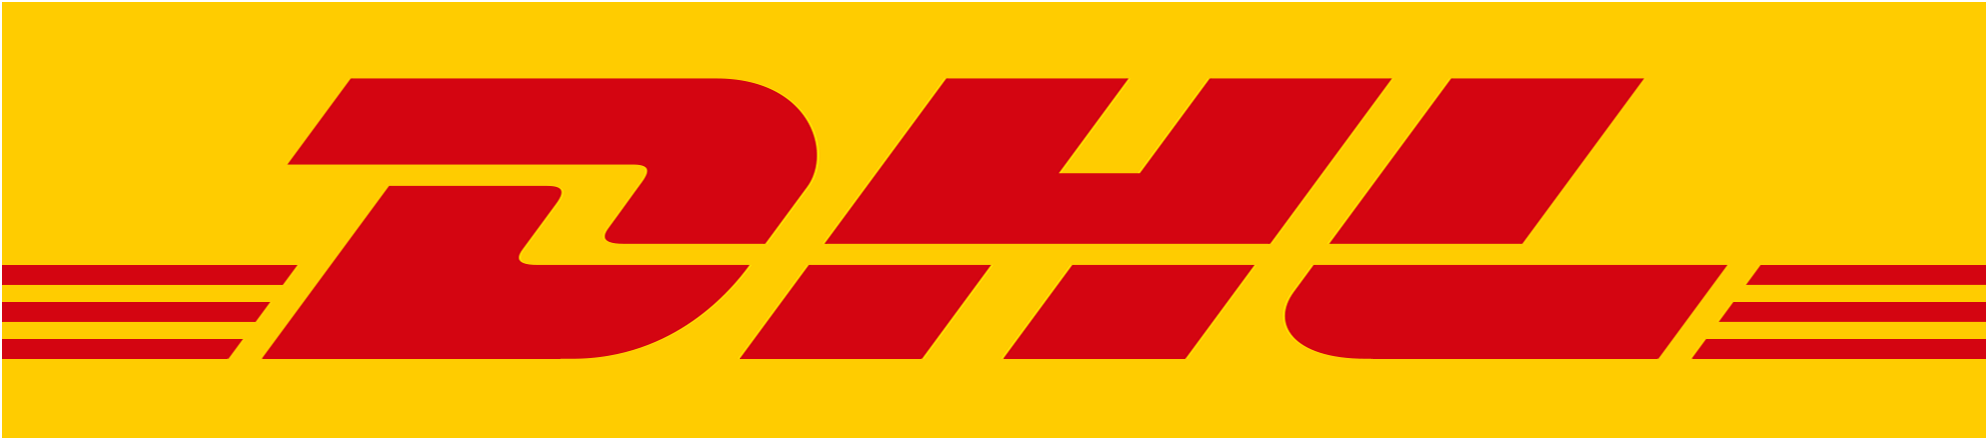 DHL Express (Norway) AS